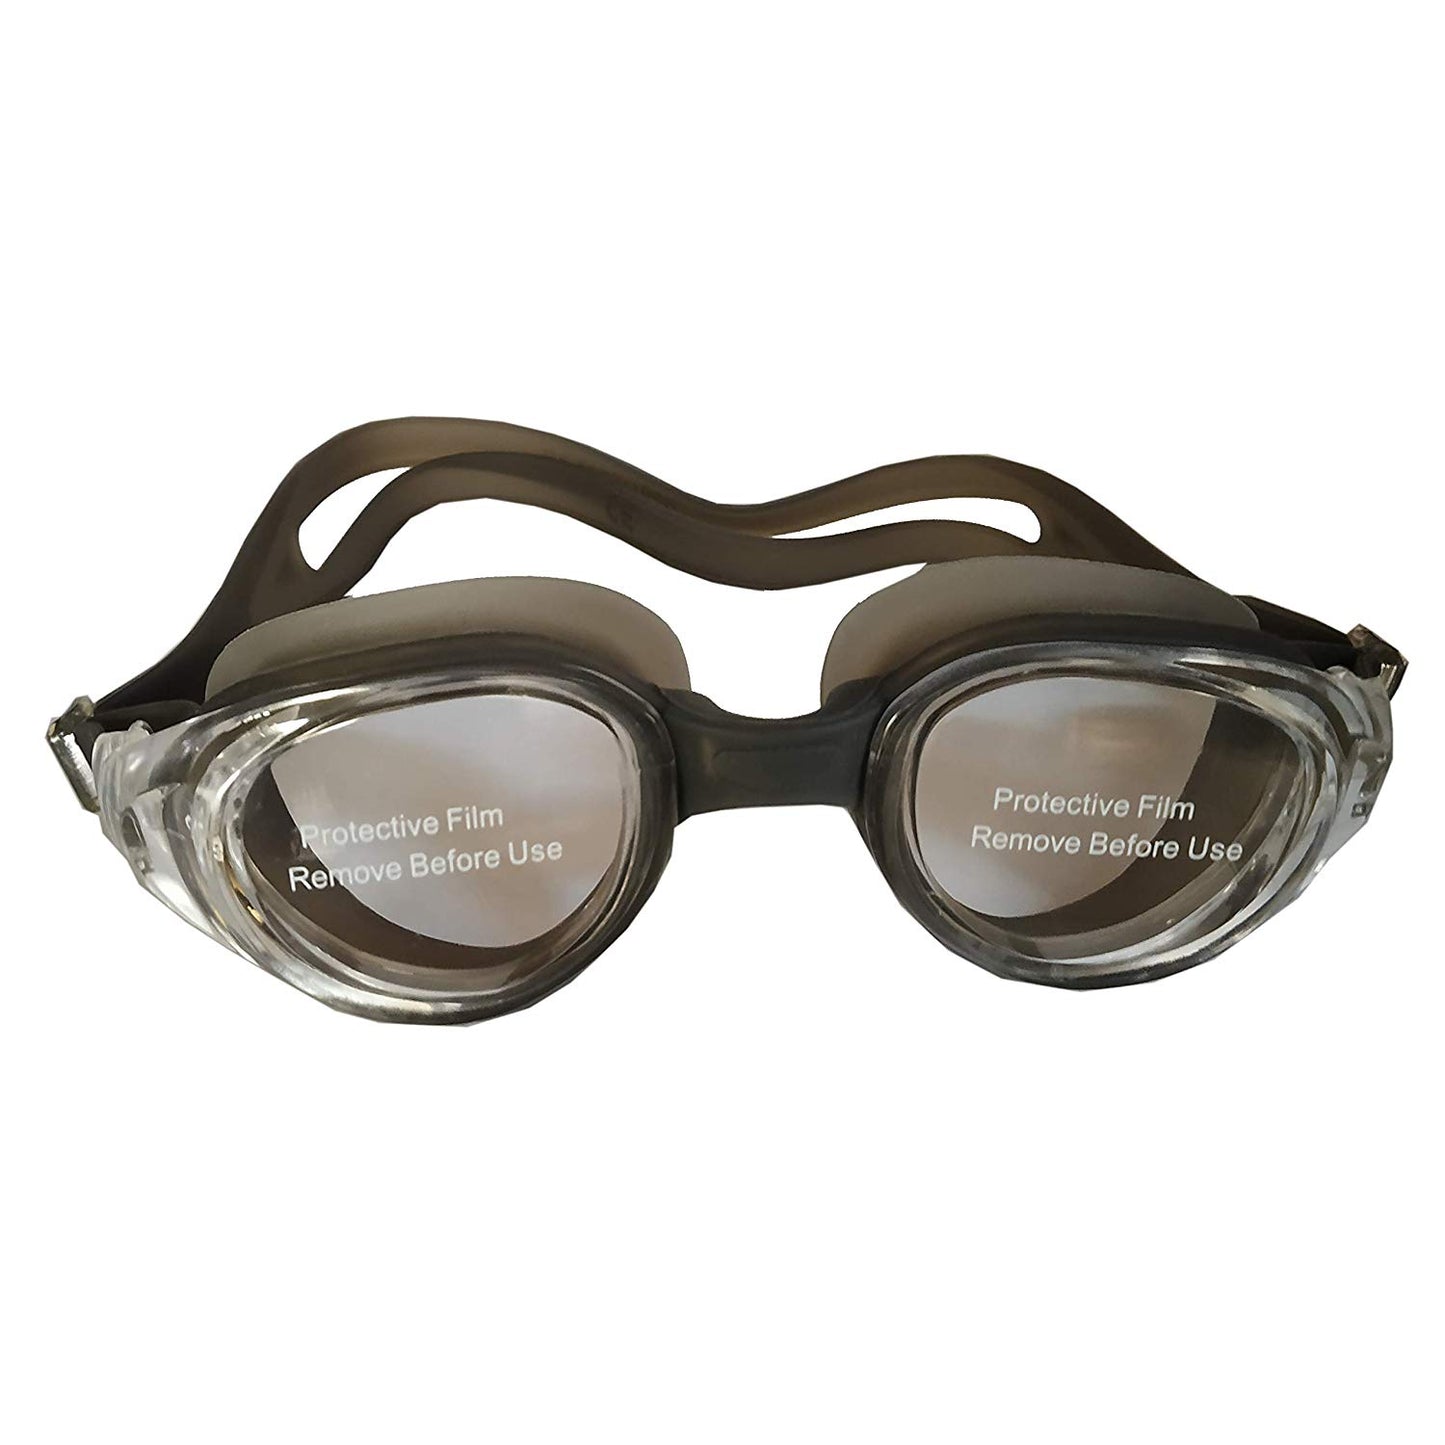 Viva Sports Swimming Goggles, Smoke - Best Price online Prokicksports.com